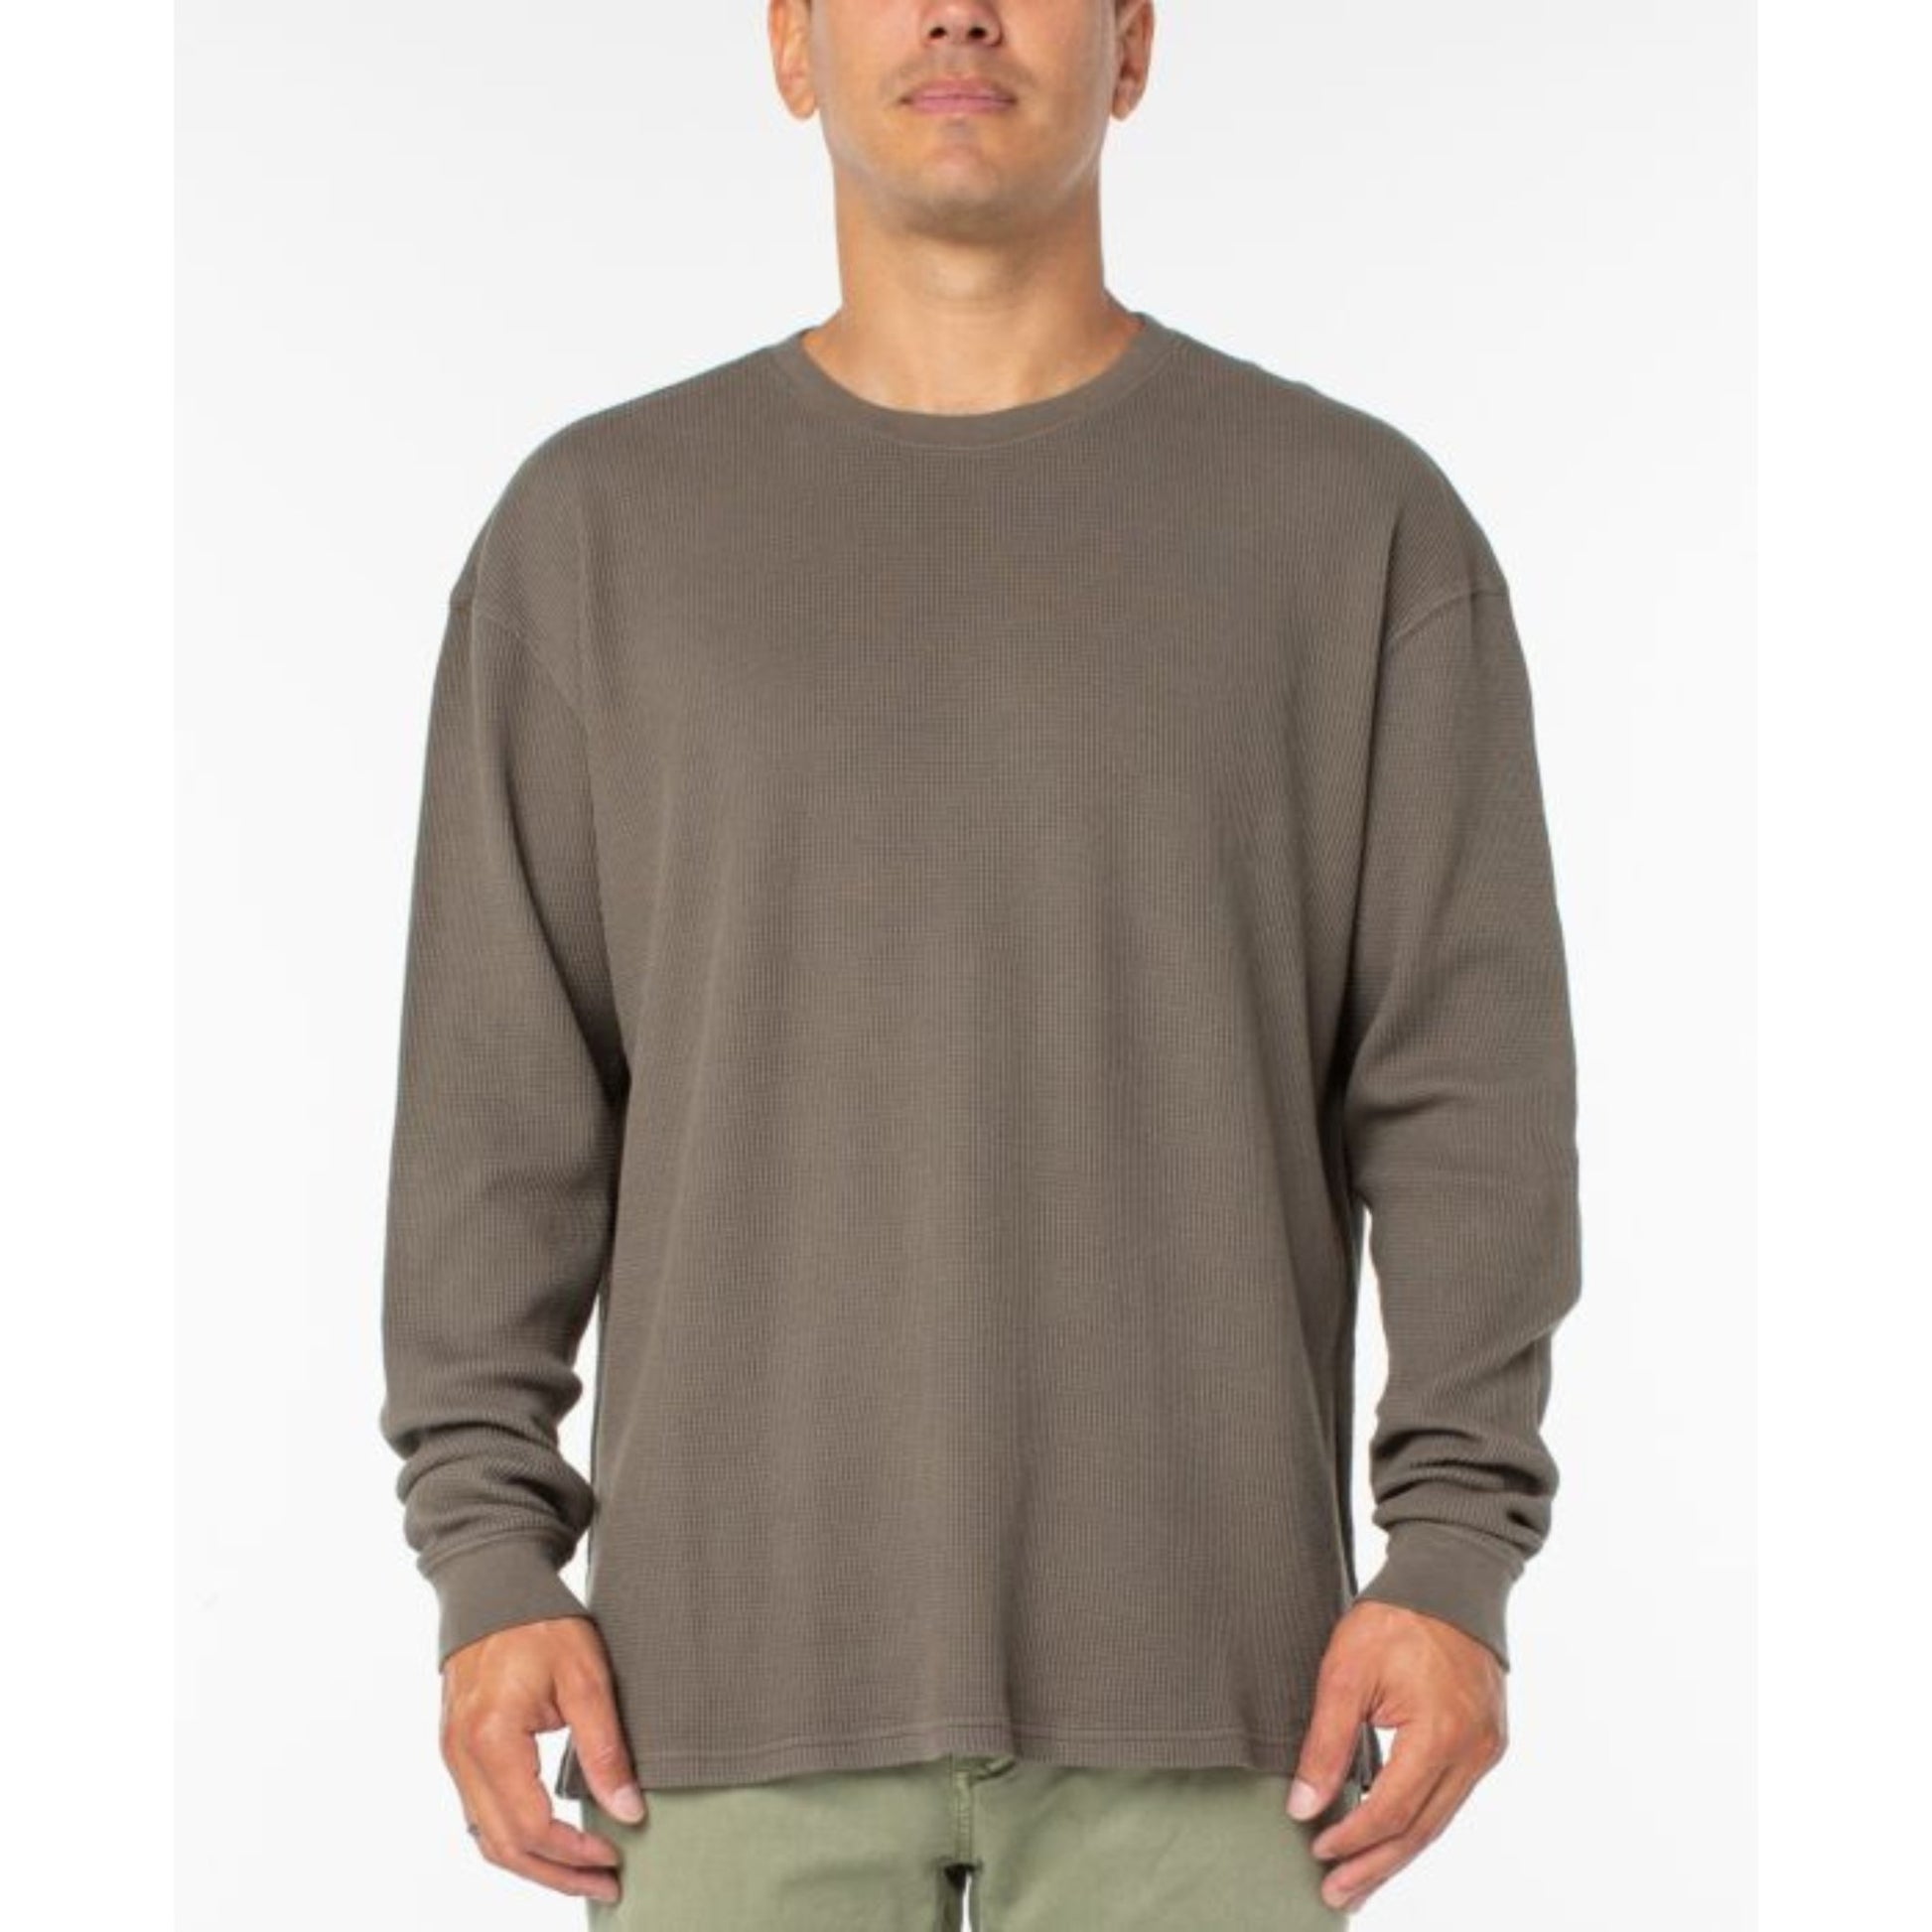 Sanctuary-100% Cotton Sanctuary Mens Long-Sleeve Thermal Shirt, Green - Brandat Outlet